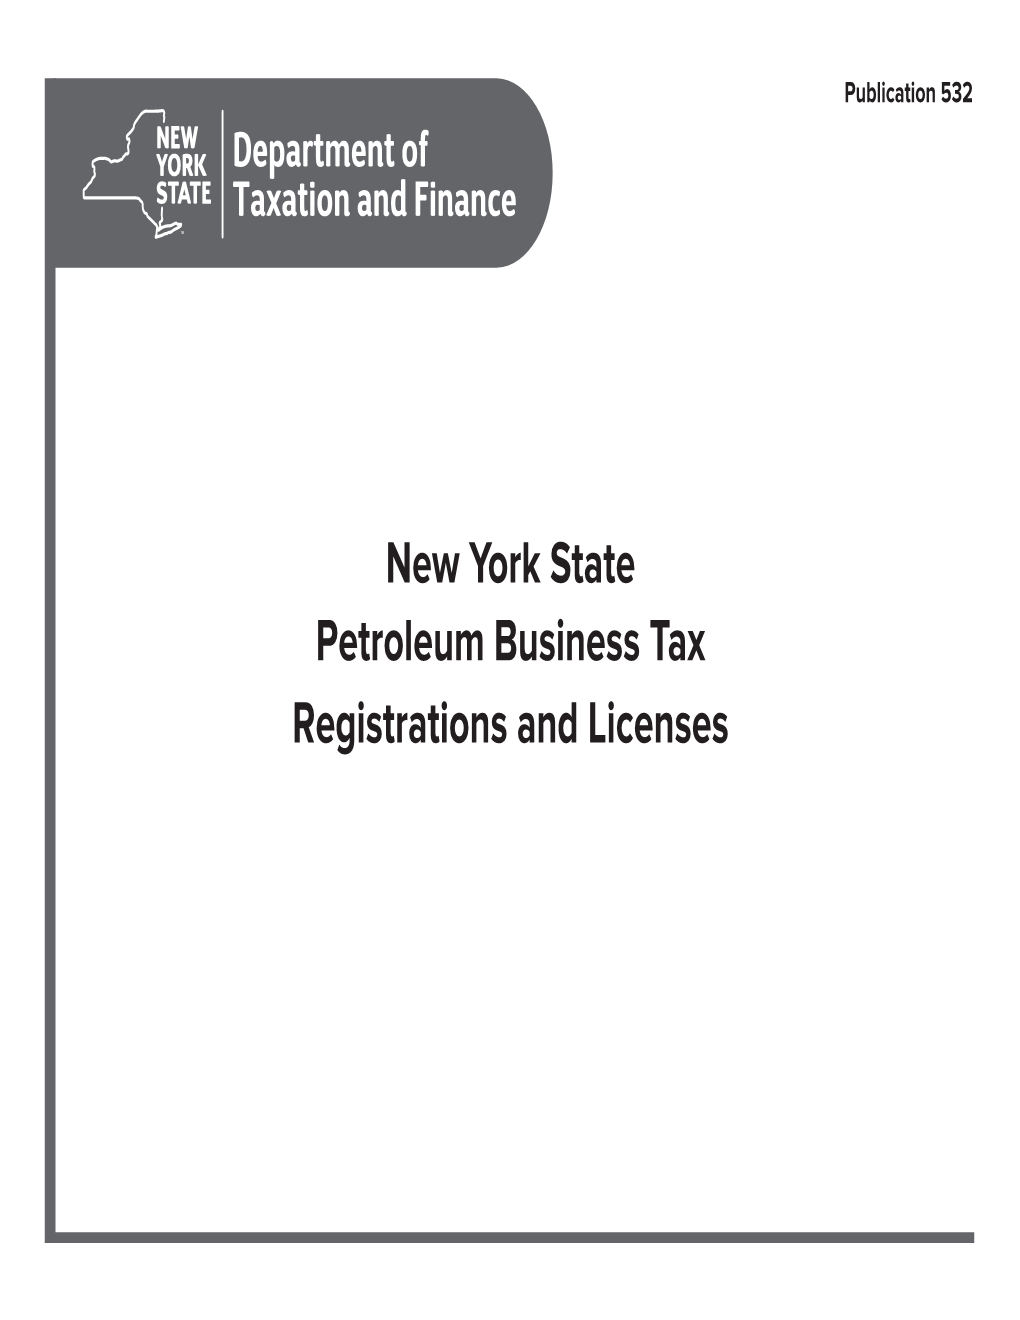 New York State Petroleum Business Tax Druwbcamcw^]B M]Q &gt;WPR